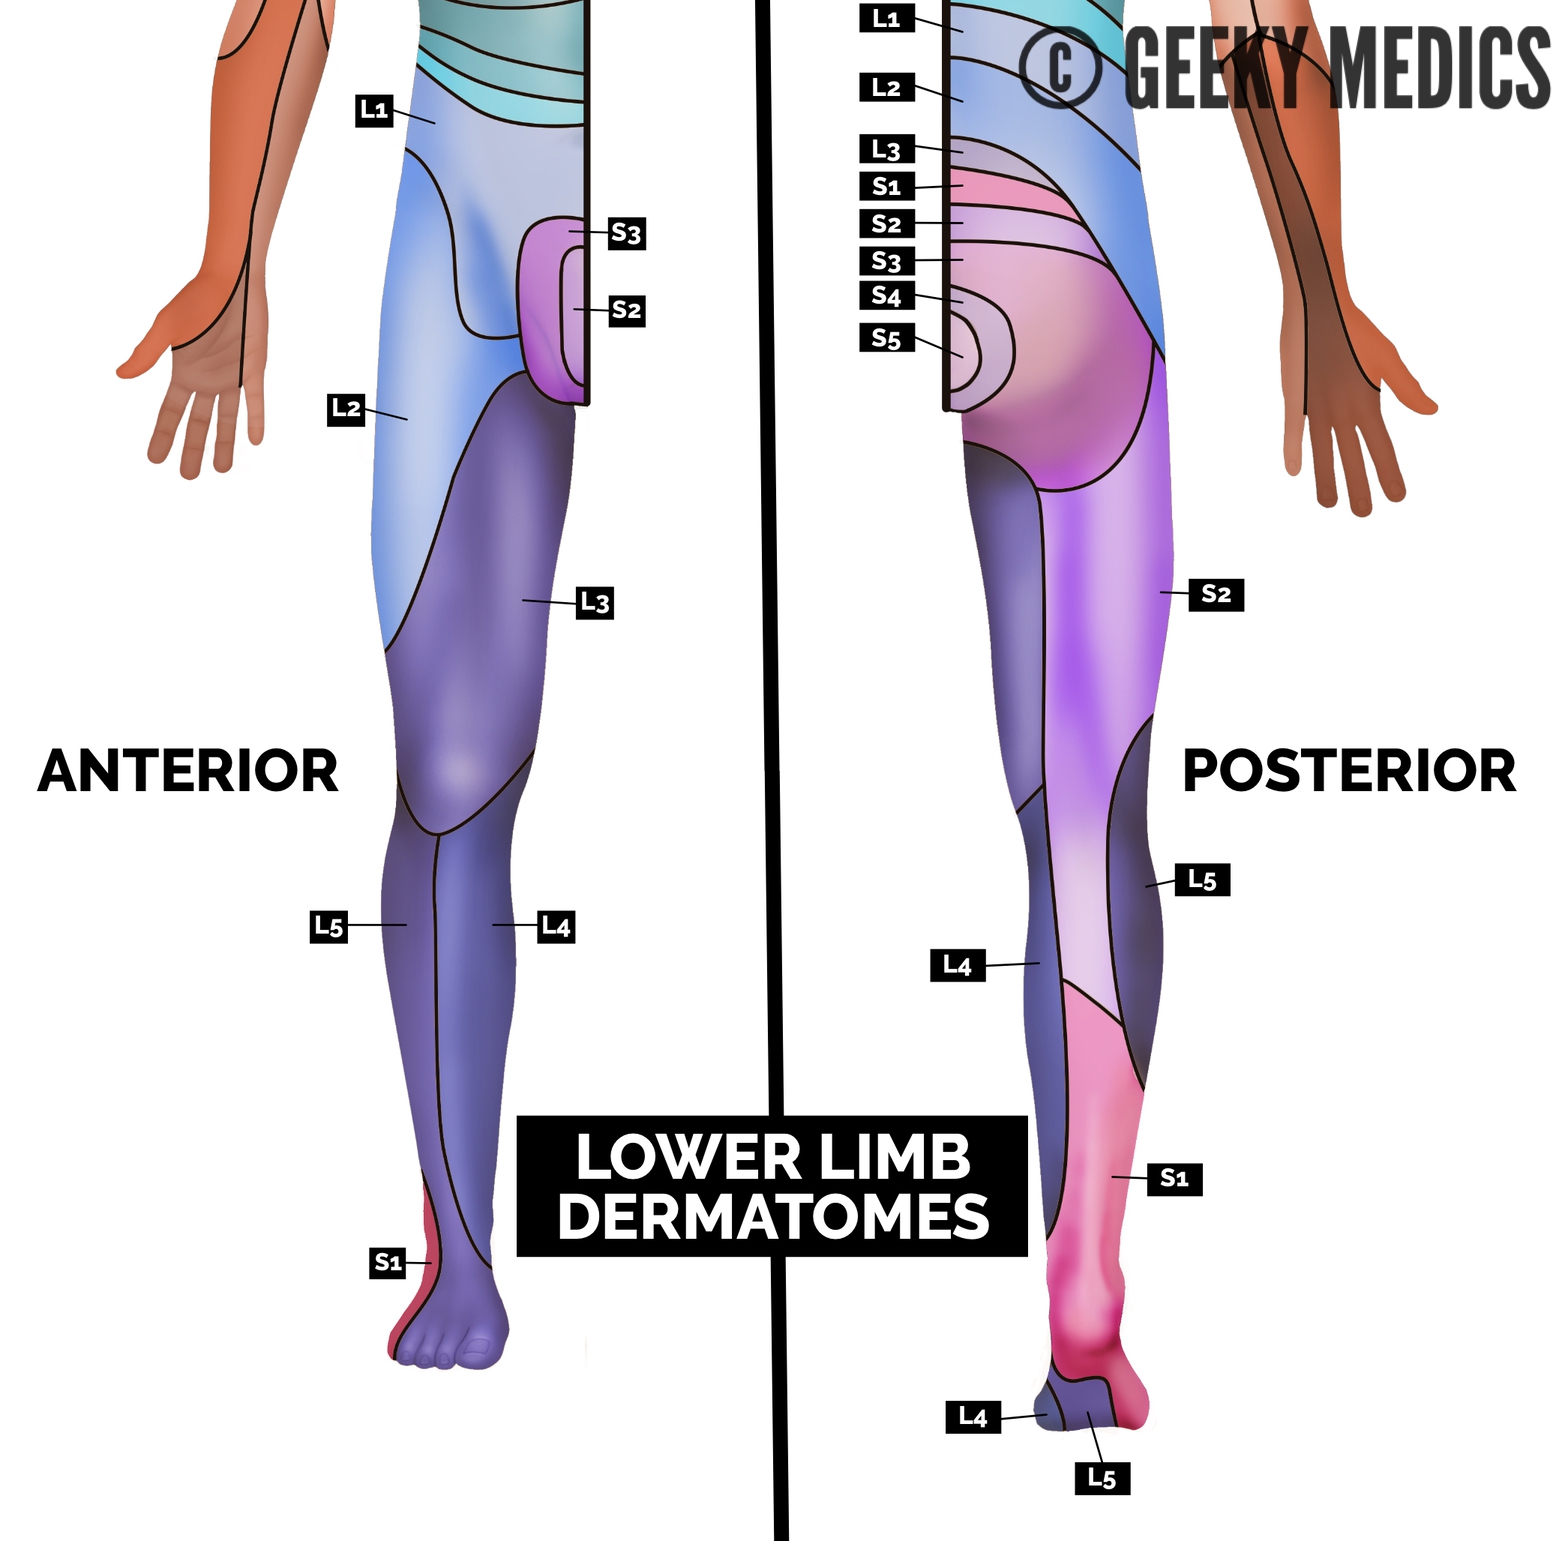 Lower Limb Neurological Examination Osce Guide Geeky Medics